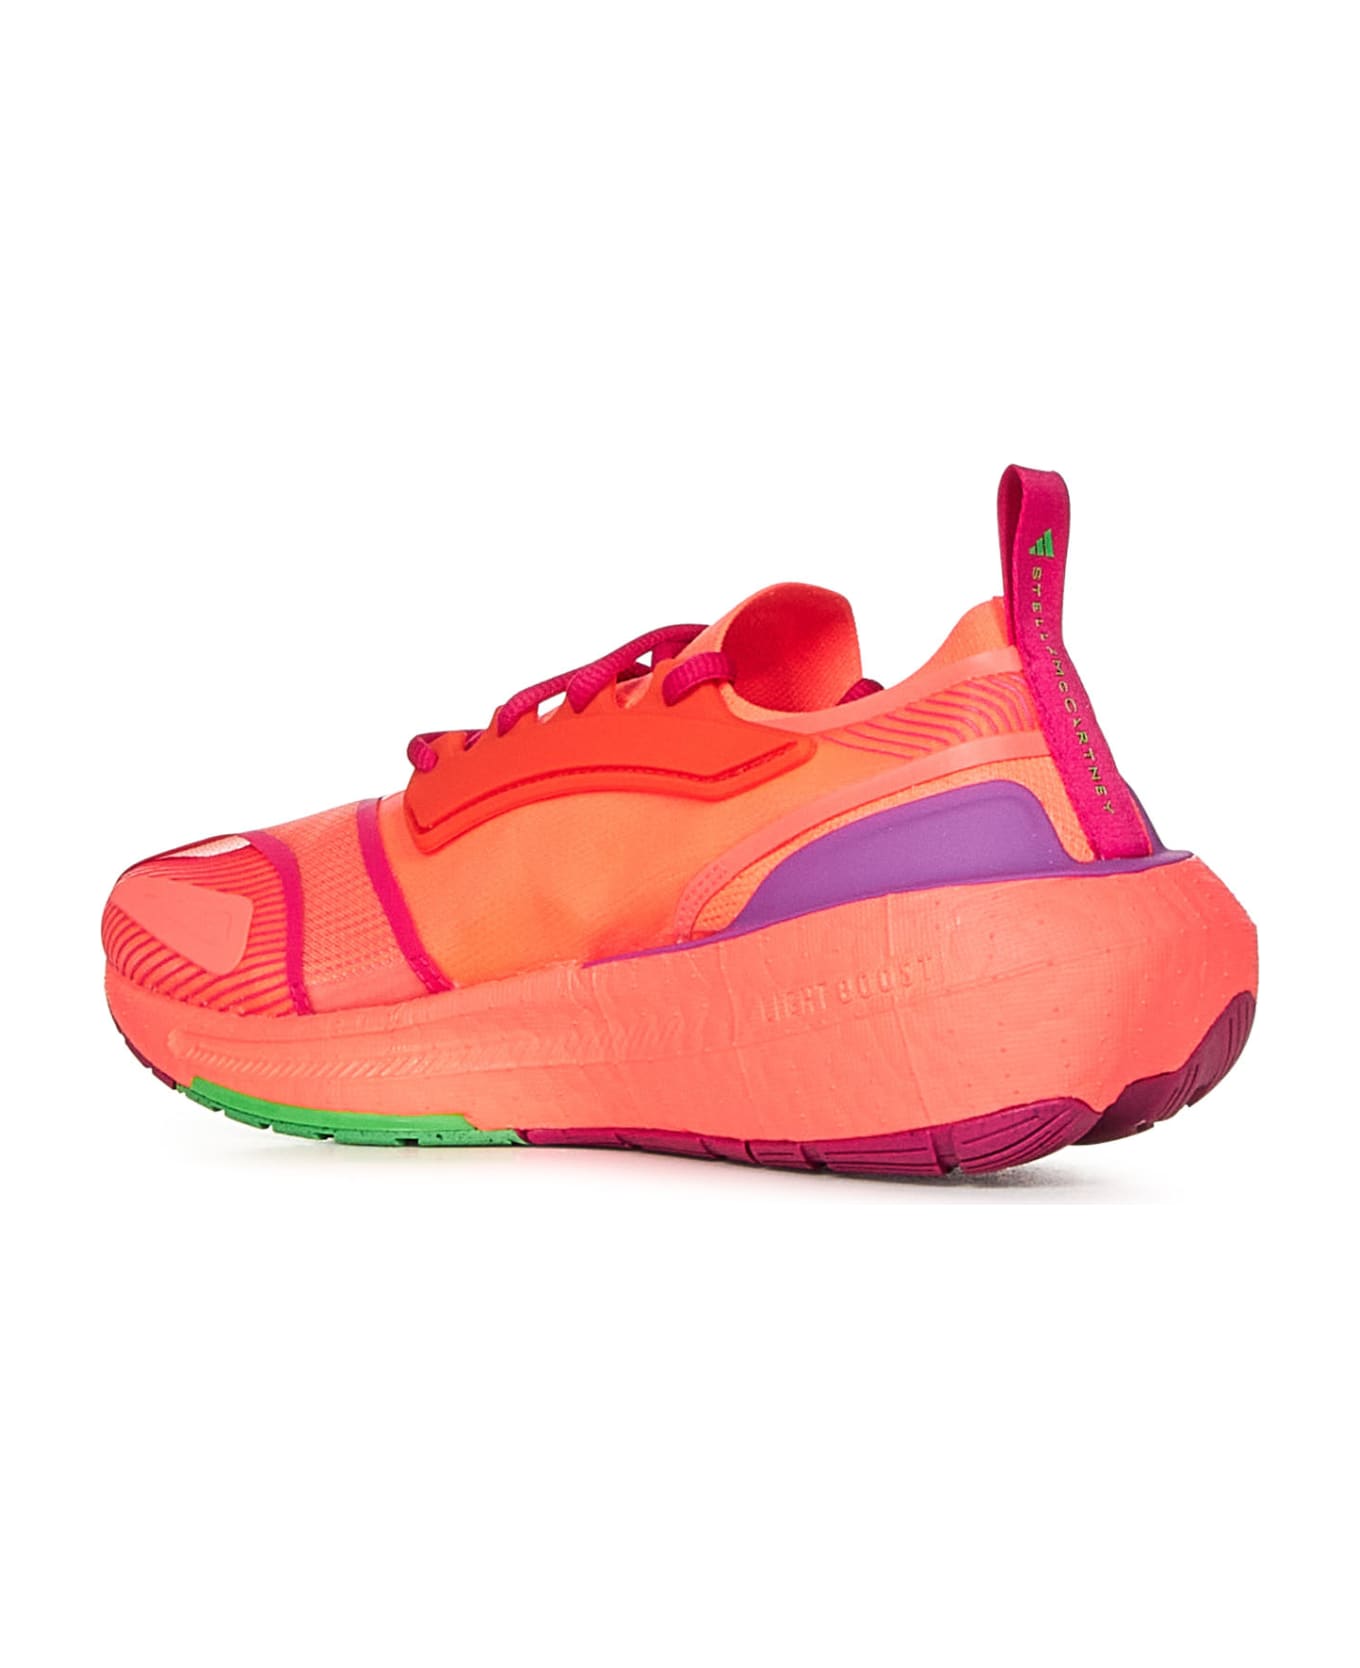 Adidas by Stella McCartney Ultraboost Light Sneakers - Turbo スニーカー